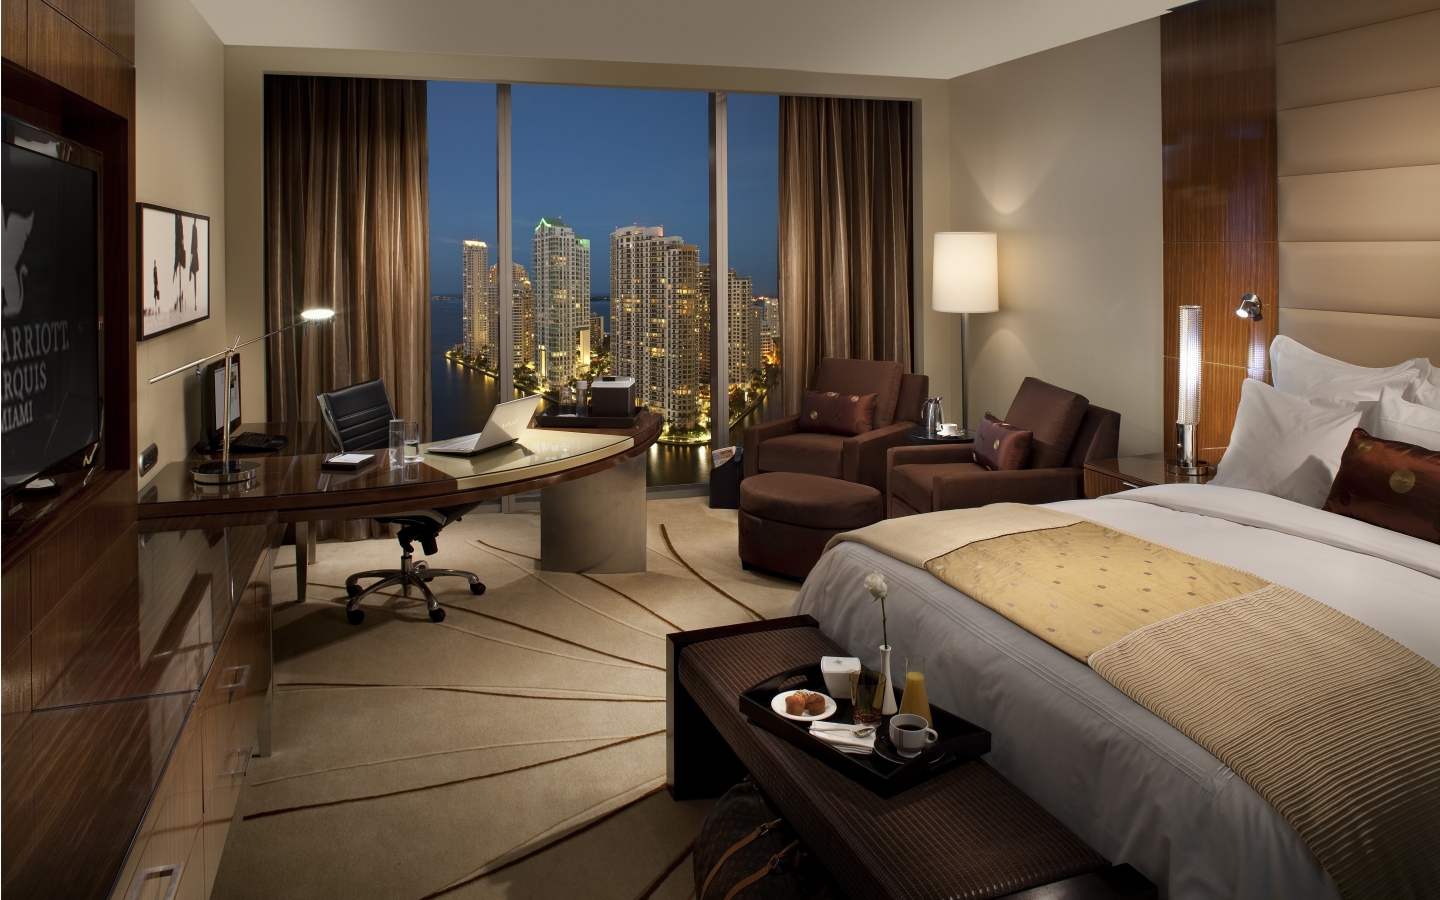 Miami Florida Hotel Room for 1440 x 900 widescreen resolution